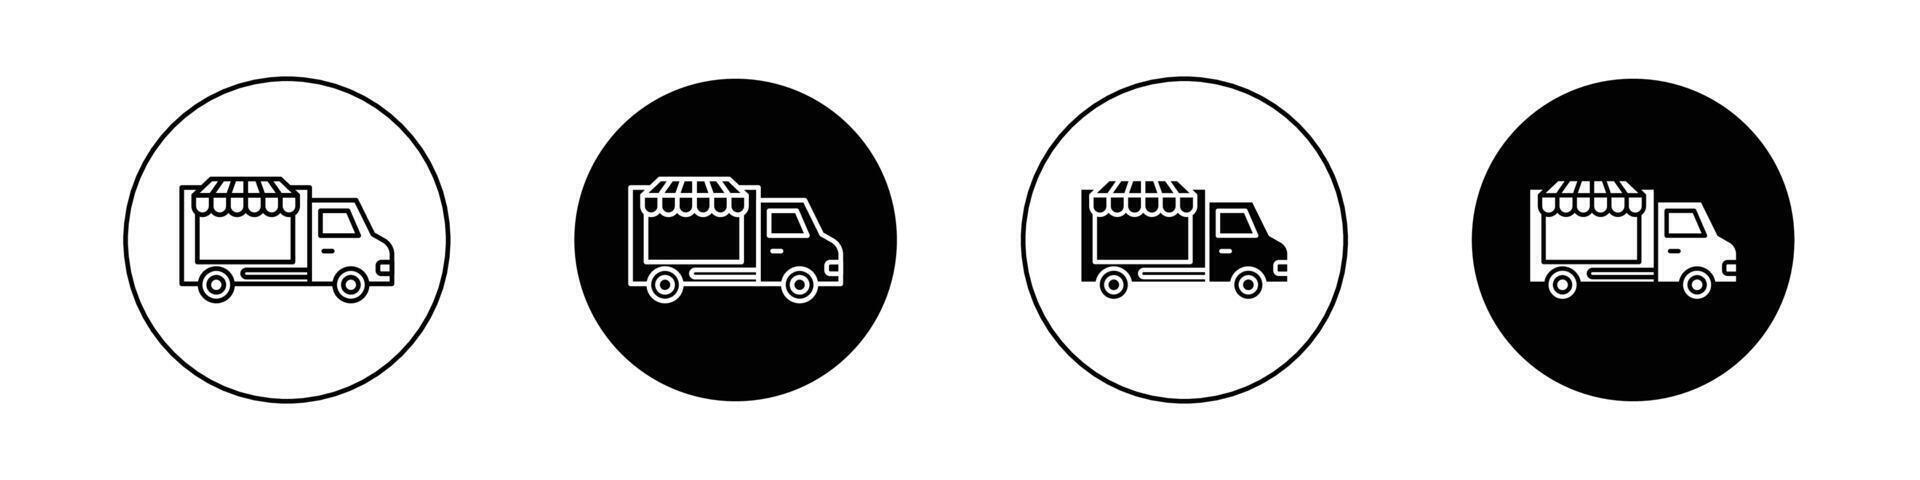 Food truck icon vector